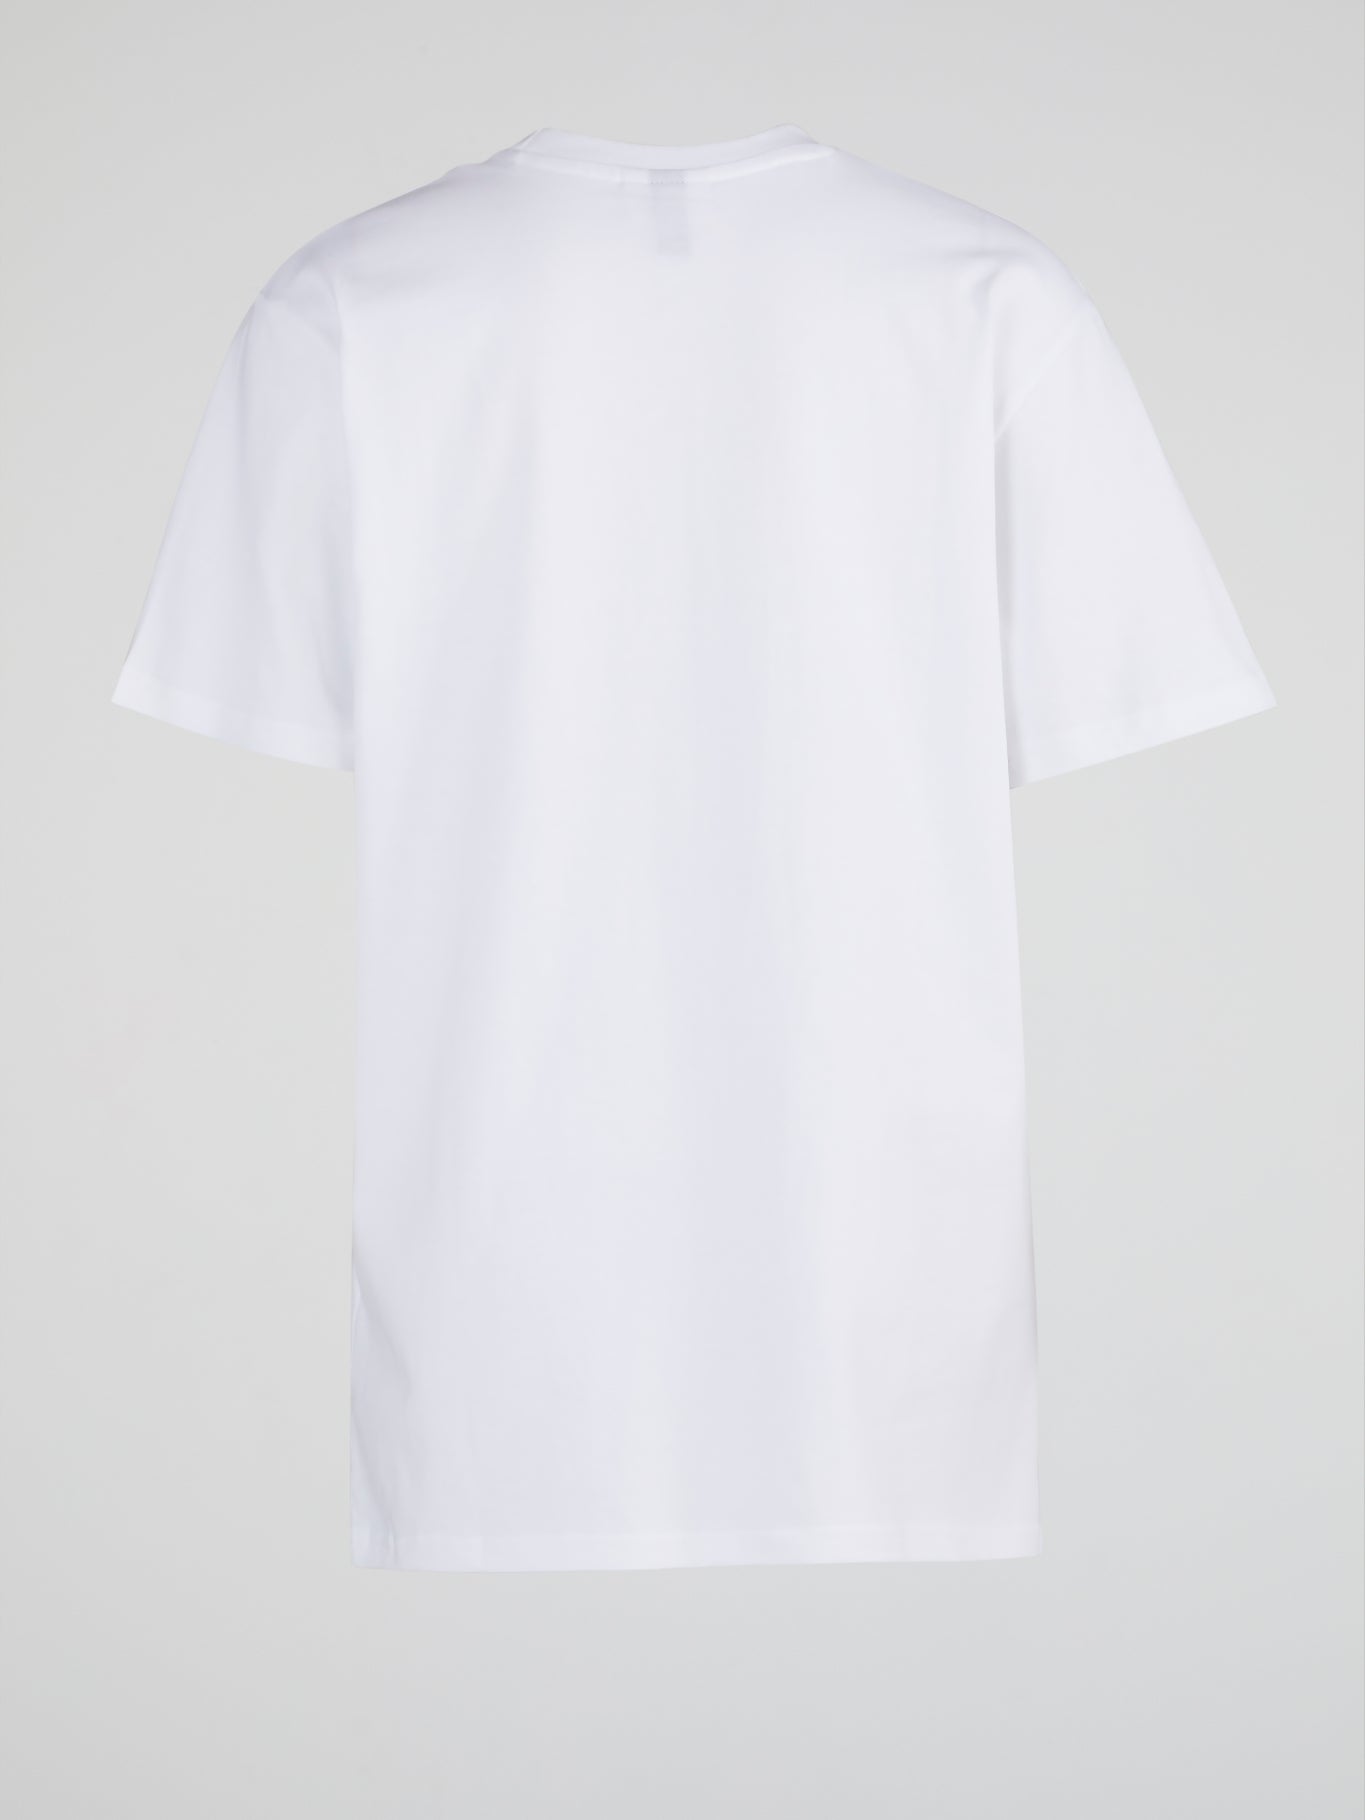 Lattea White Printed T-Shirt